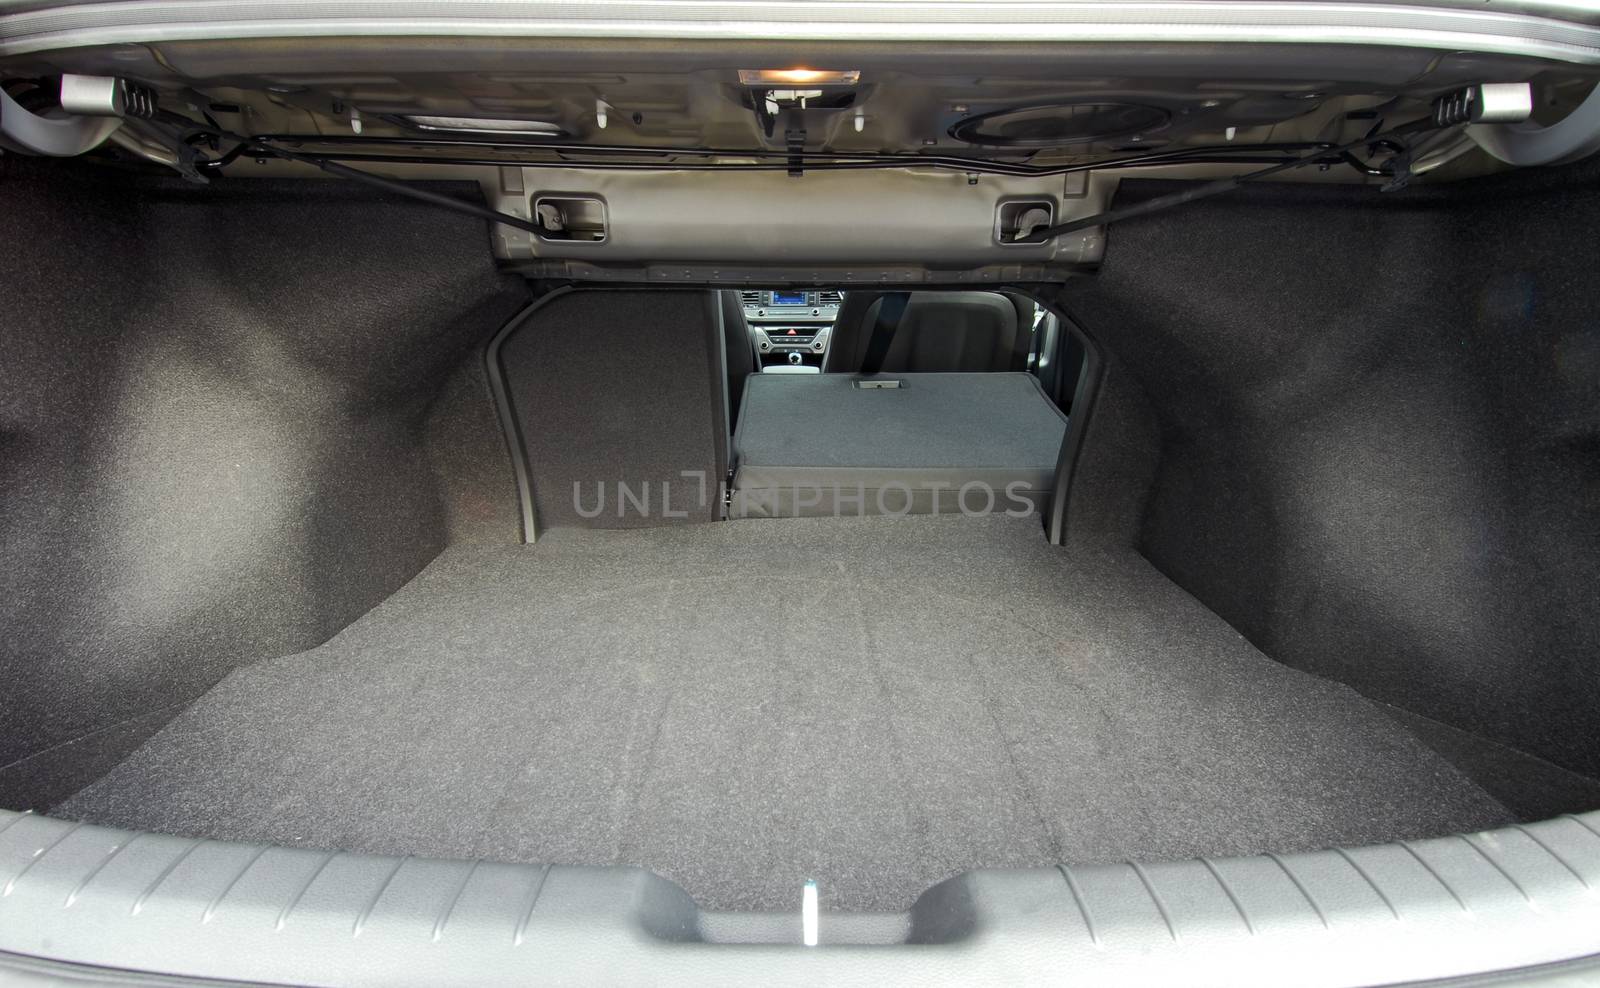 car trunk with rear seats folded of the sedan